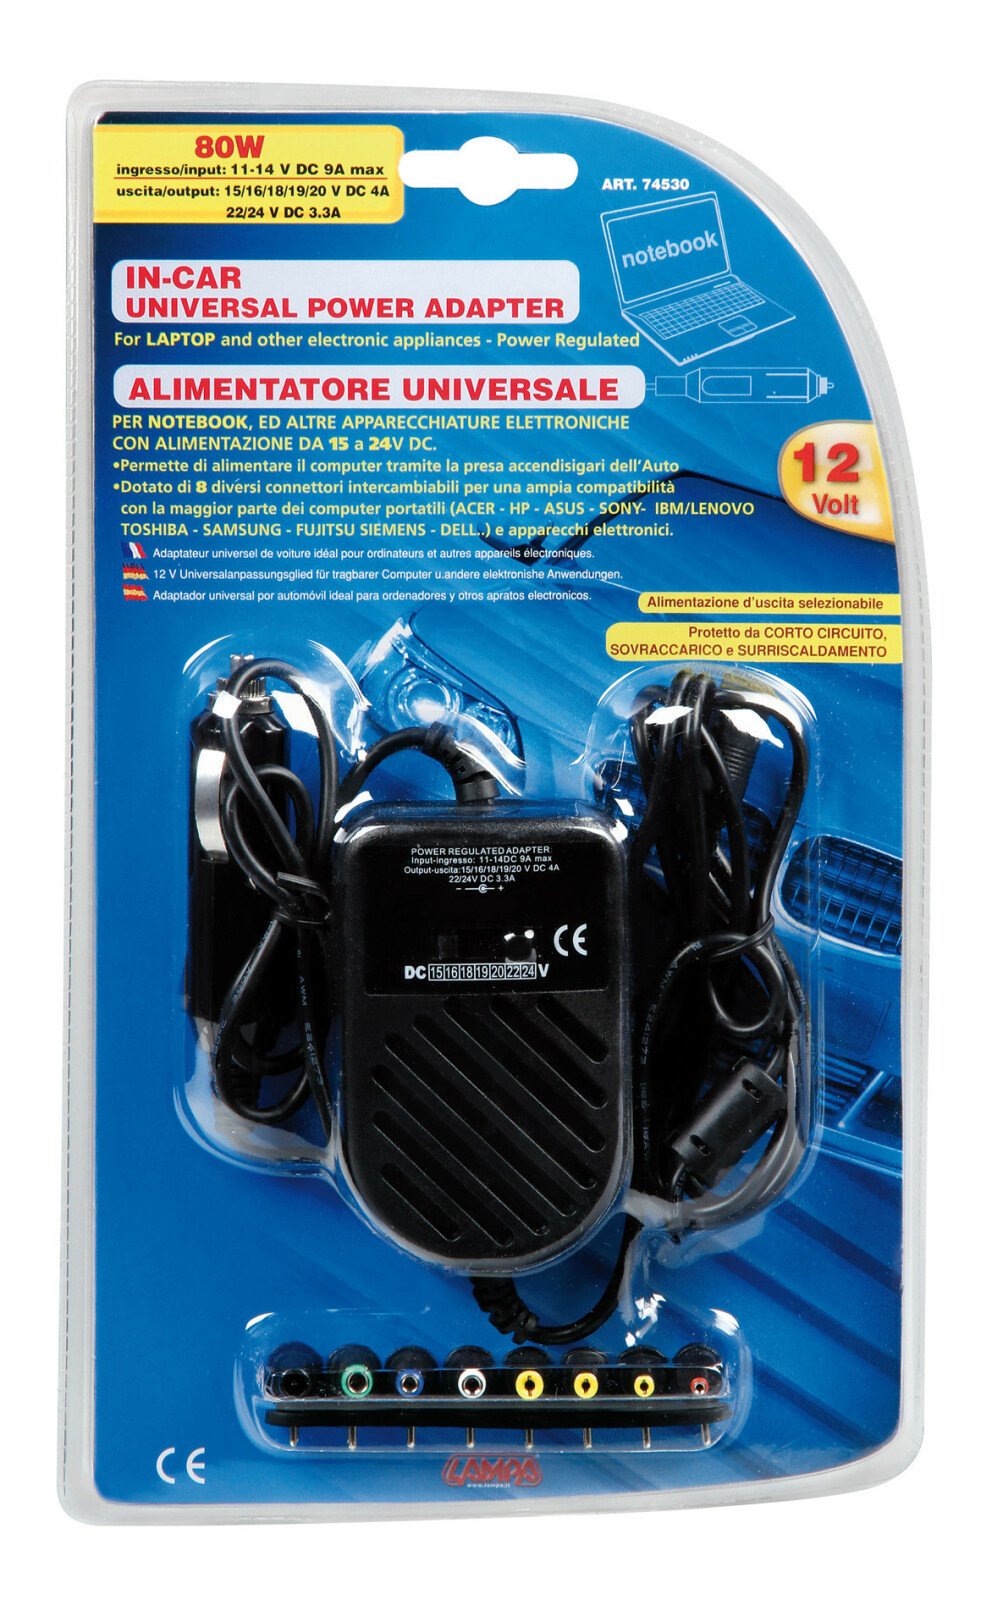 In-car universal power adapter 12V thumb